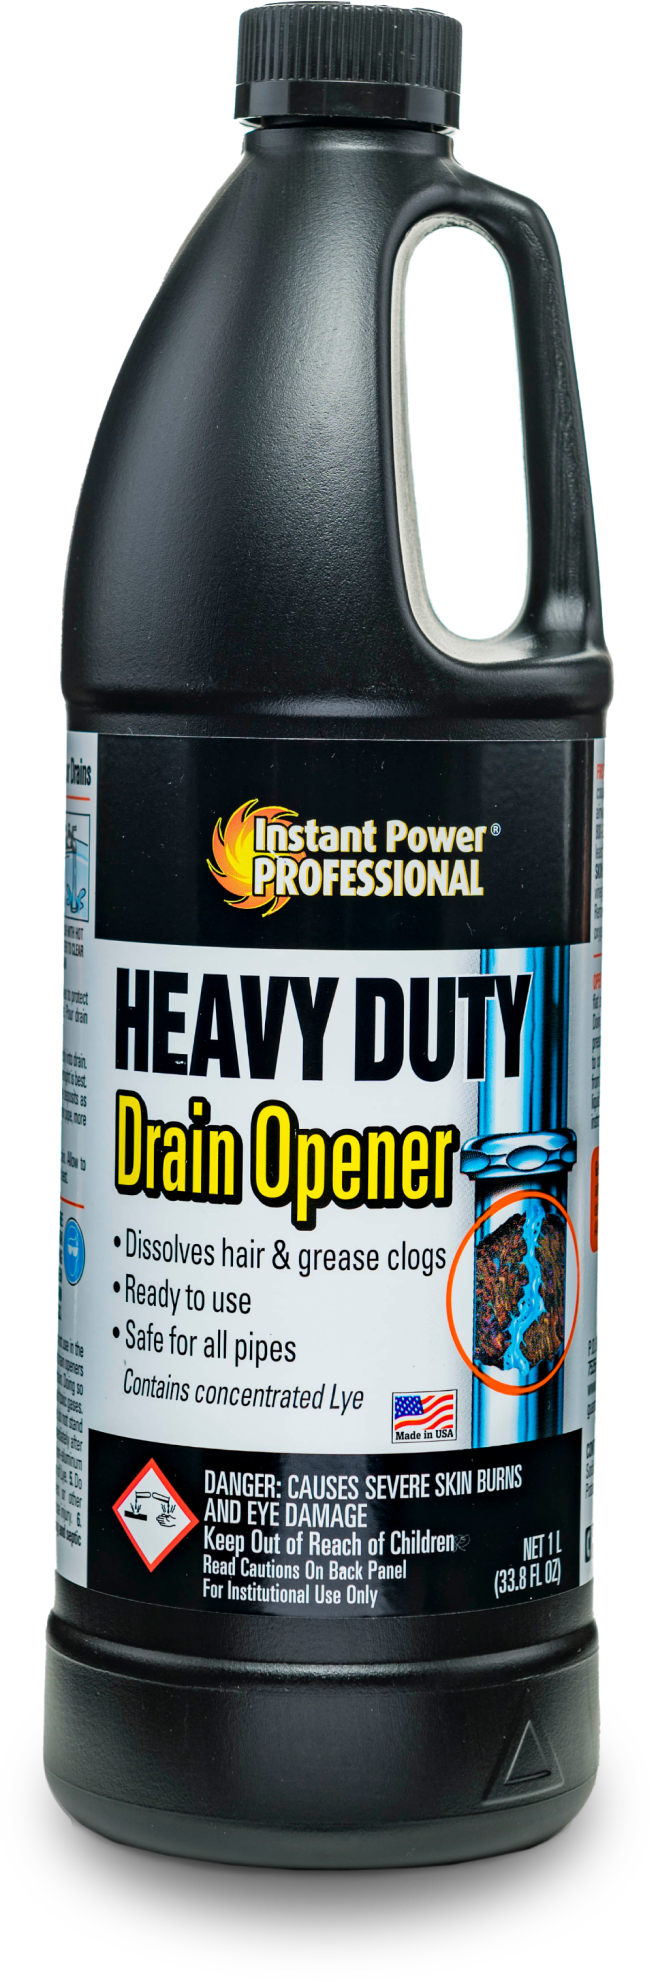 Instant Power Heavy Duty Drain Opener- 2 Pack